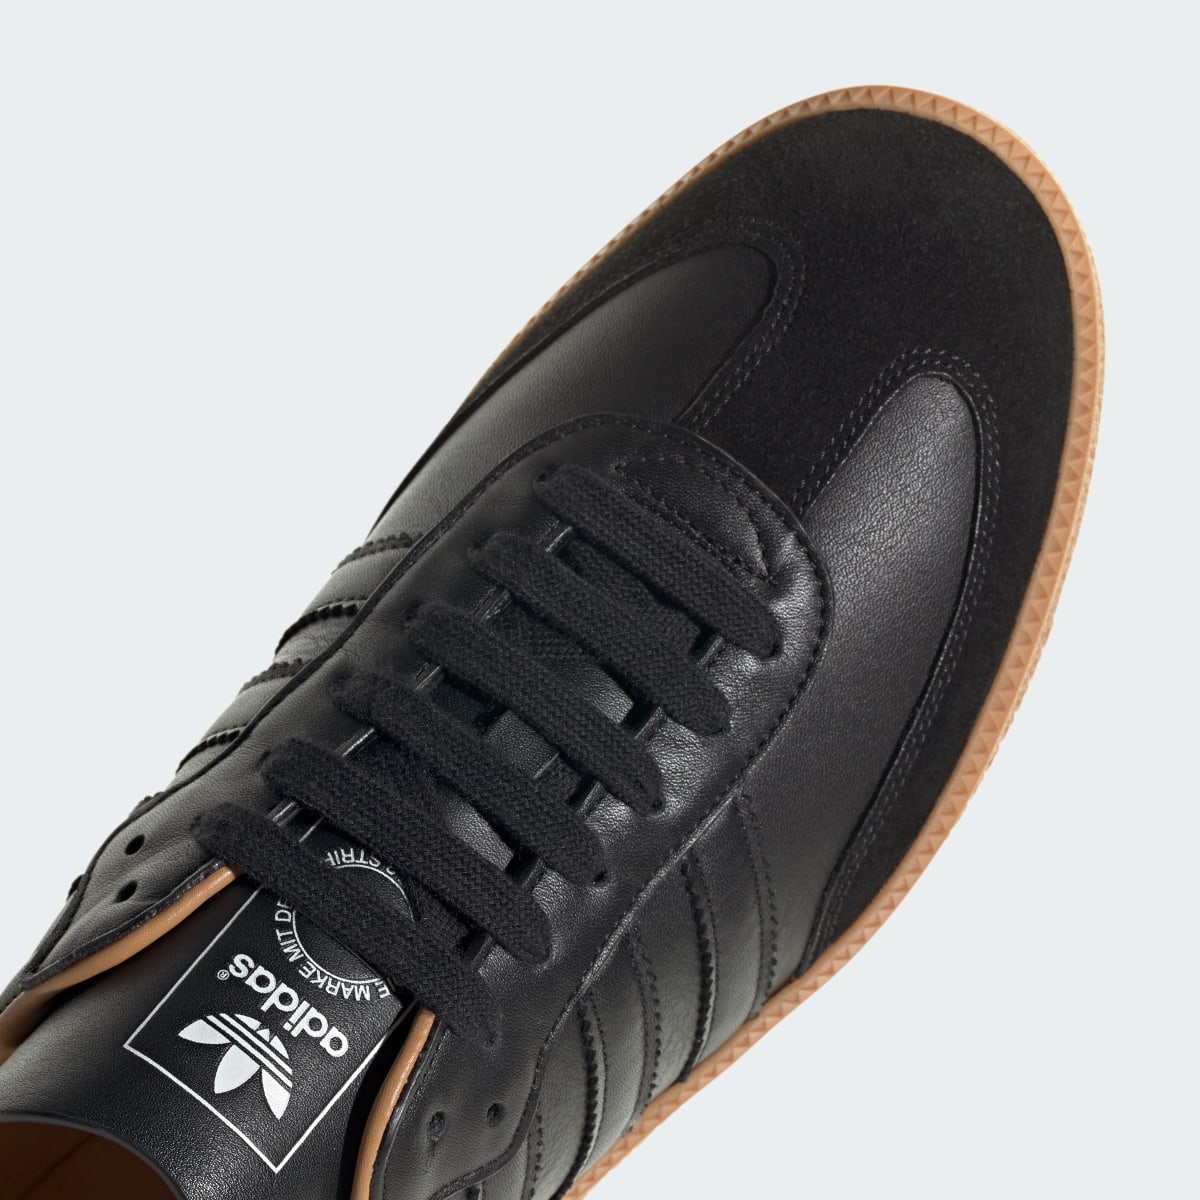 Adidas Samba OG Made In Italy Ayakkabı. 11